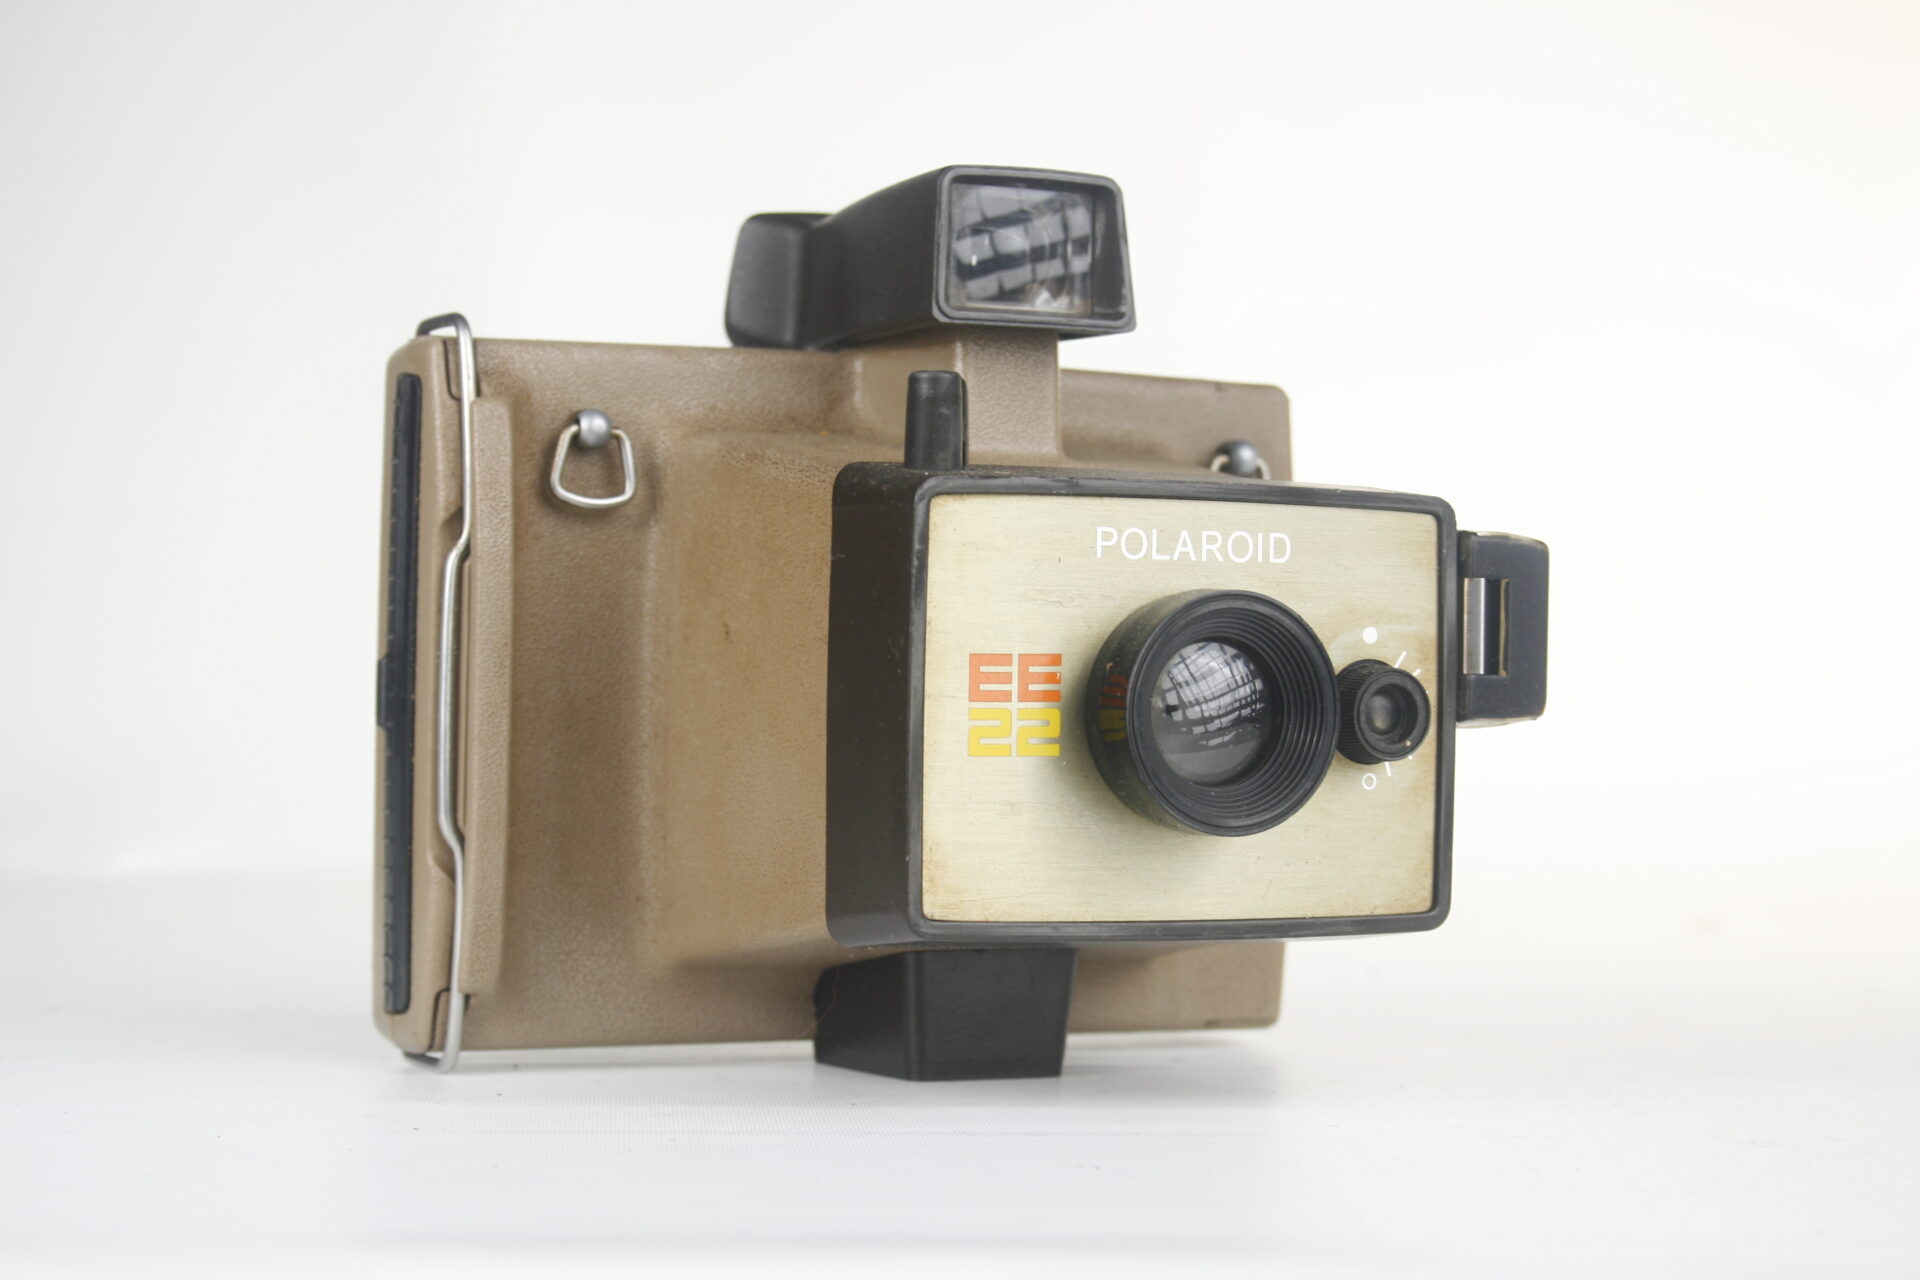 Polaroid EE 22. Instant filmpack camera. 1976-1977. USA